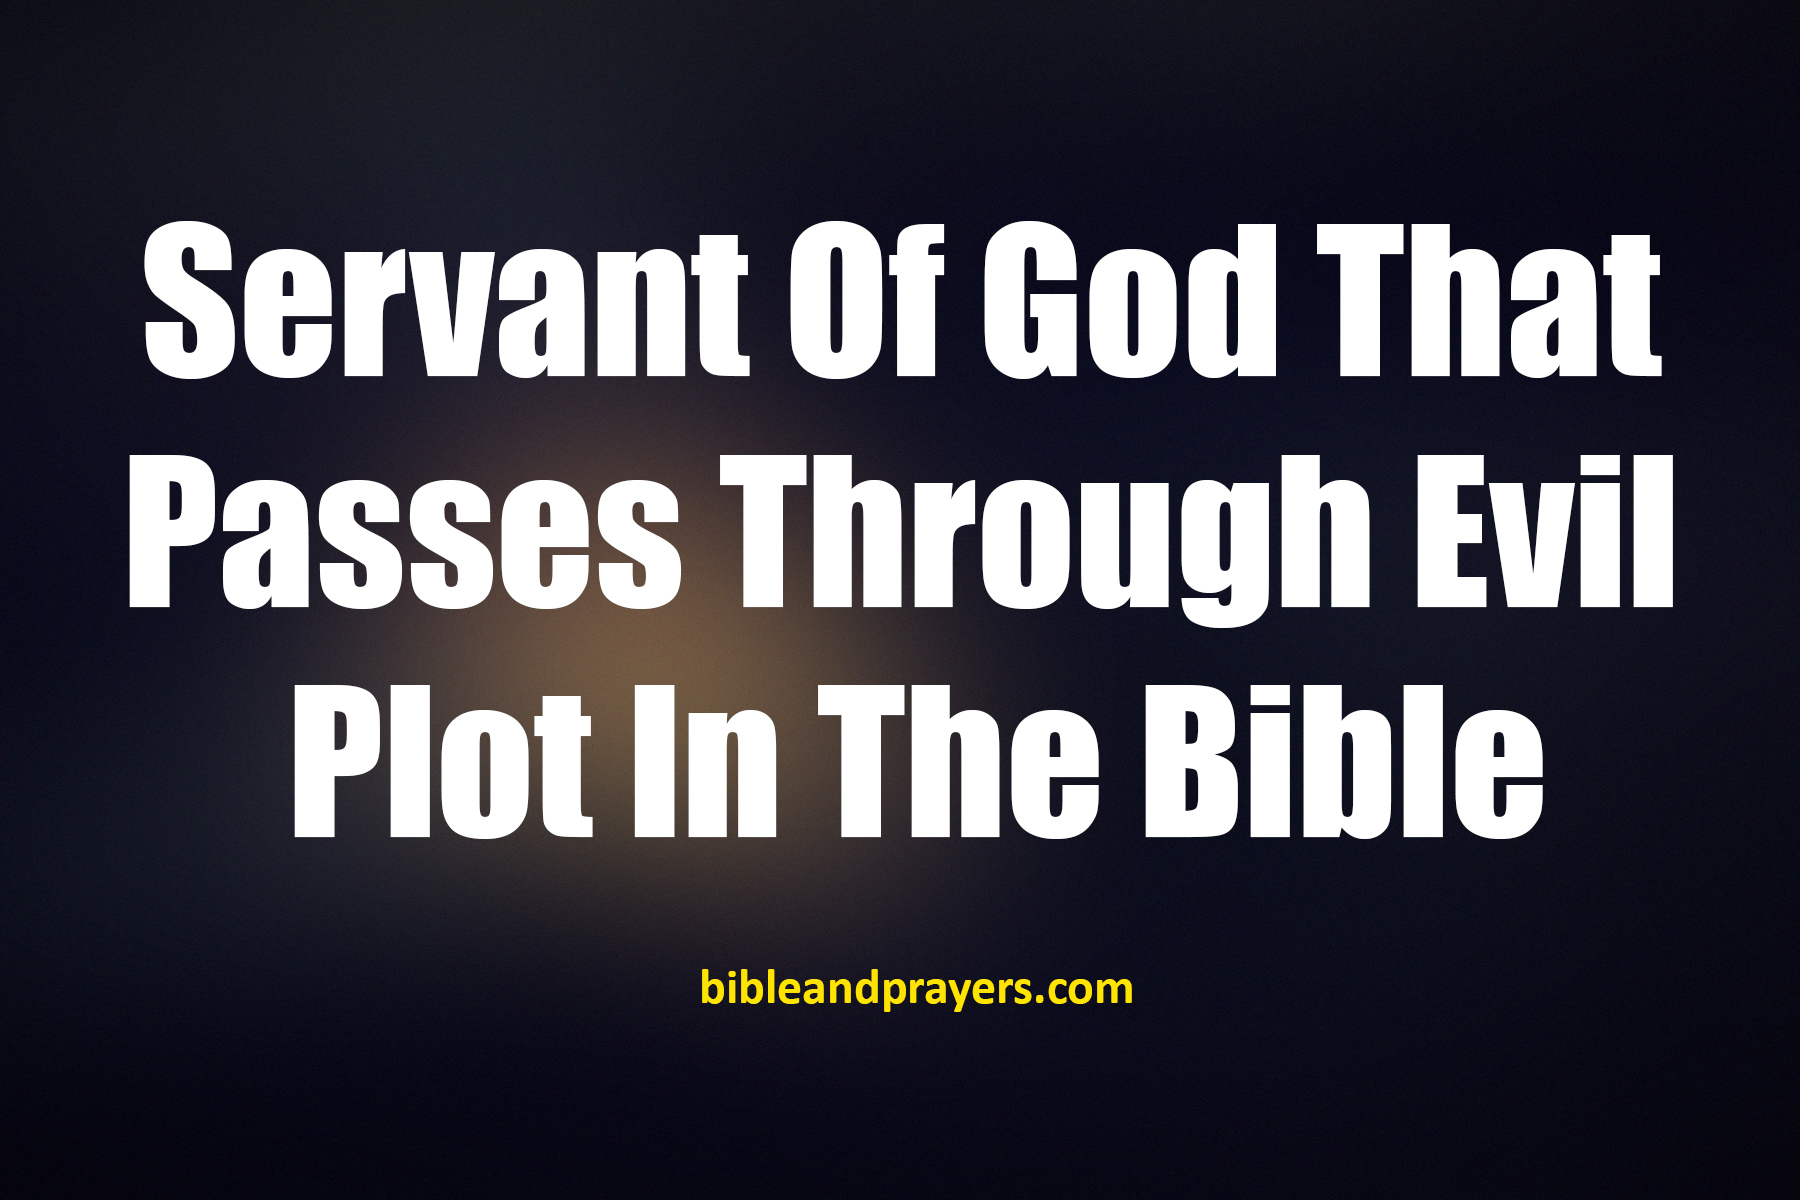 Servant Of God That Passes Through Evil Plot In The Bible